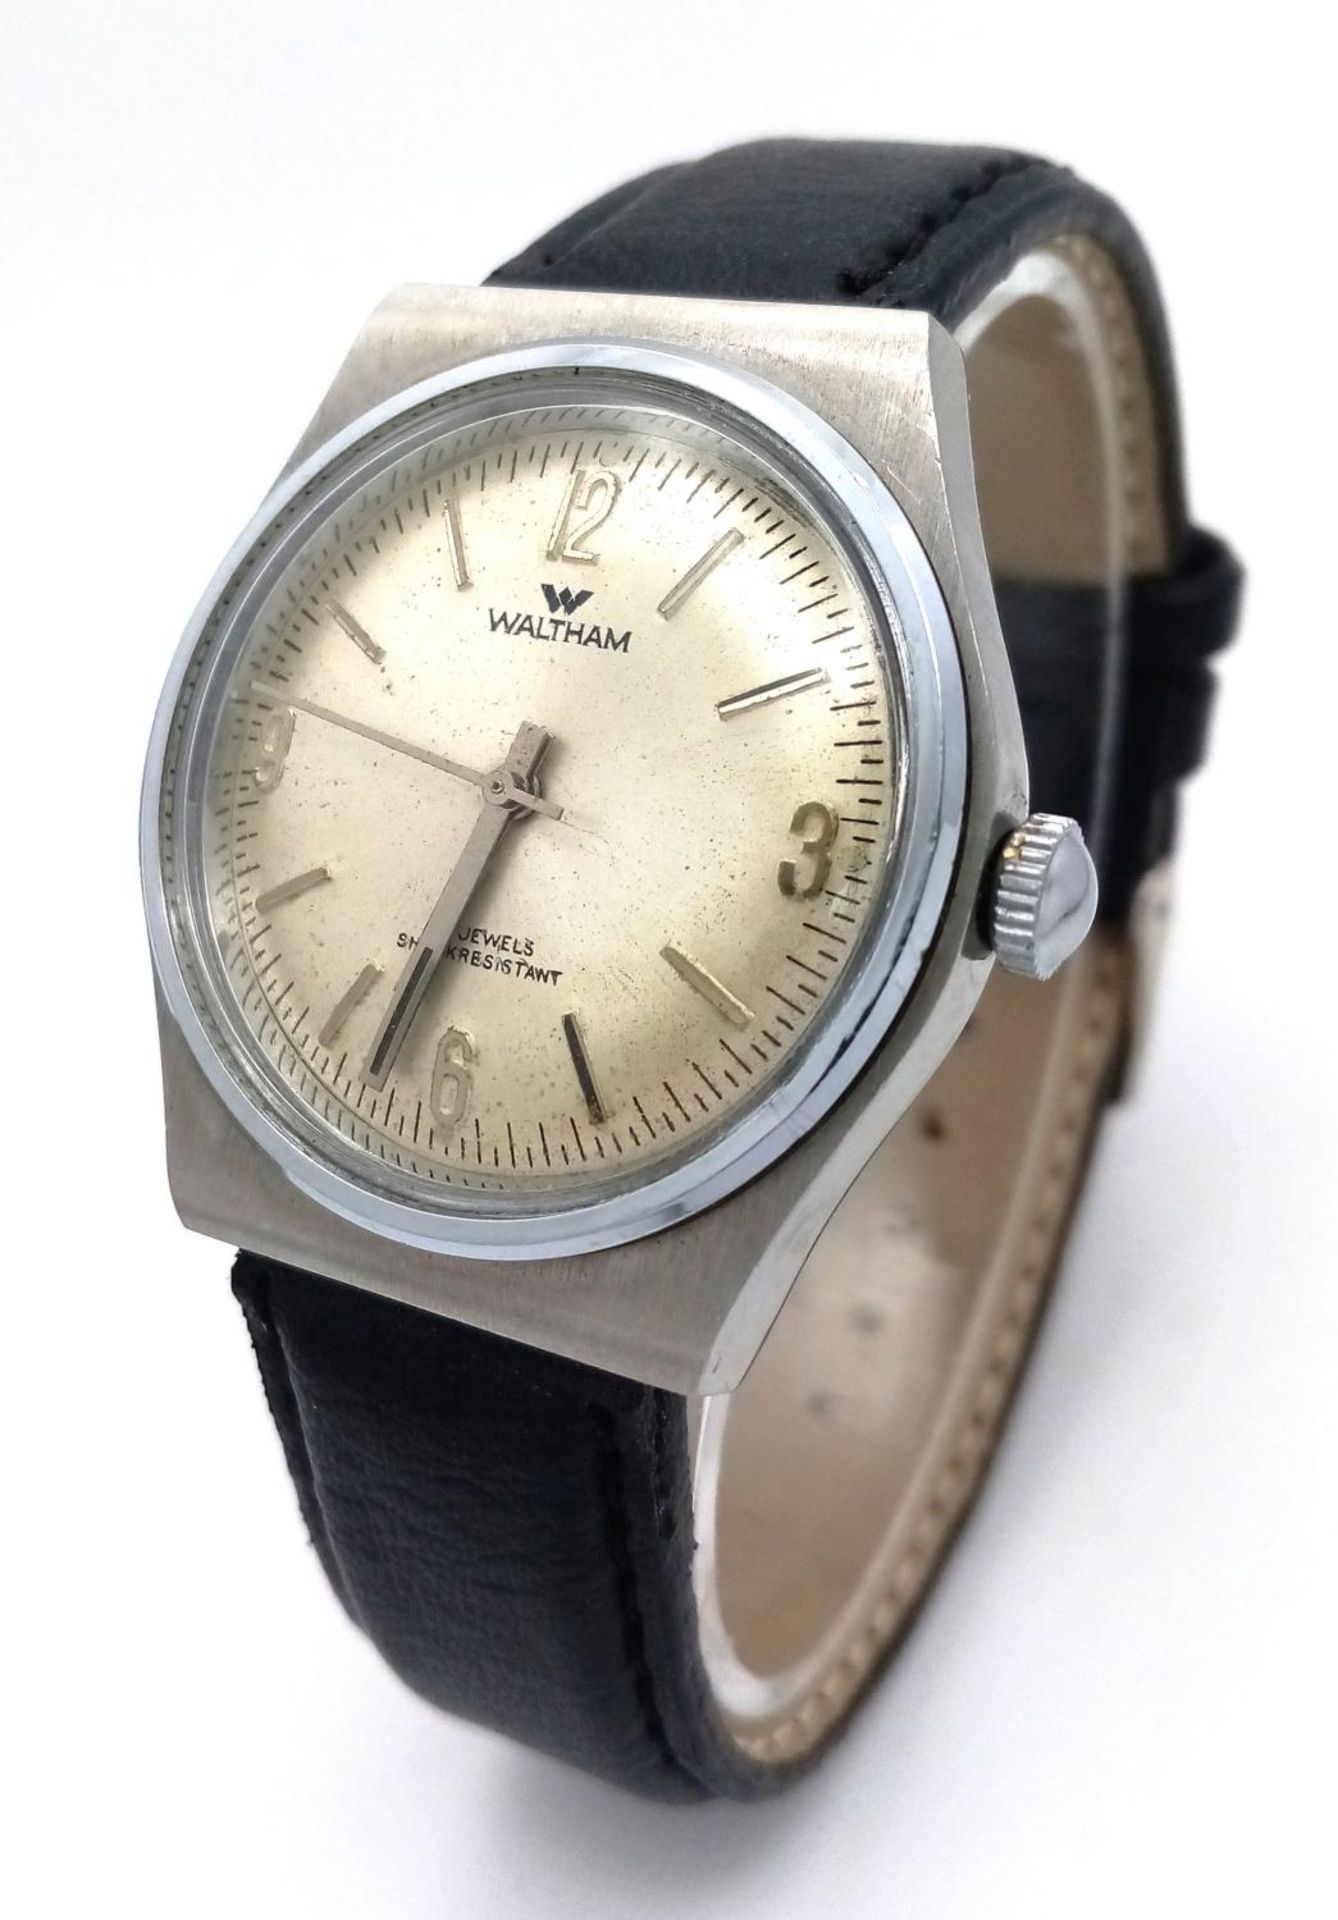 A Vintage Waltham 17 Jewel Automatic Gents Watch. Black leather strap. Stainless steel case - - Bild 2 aus 6